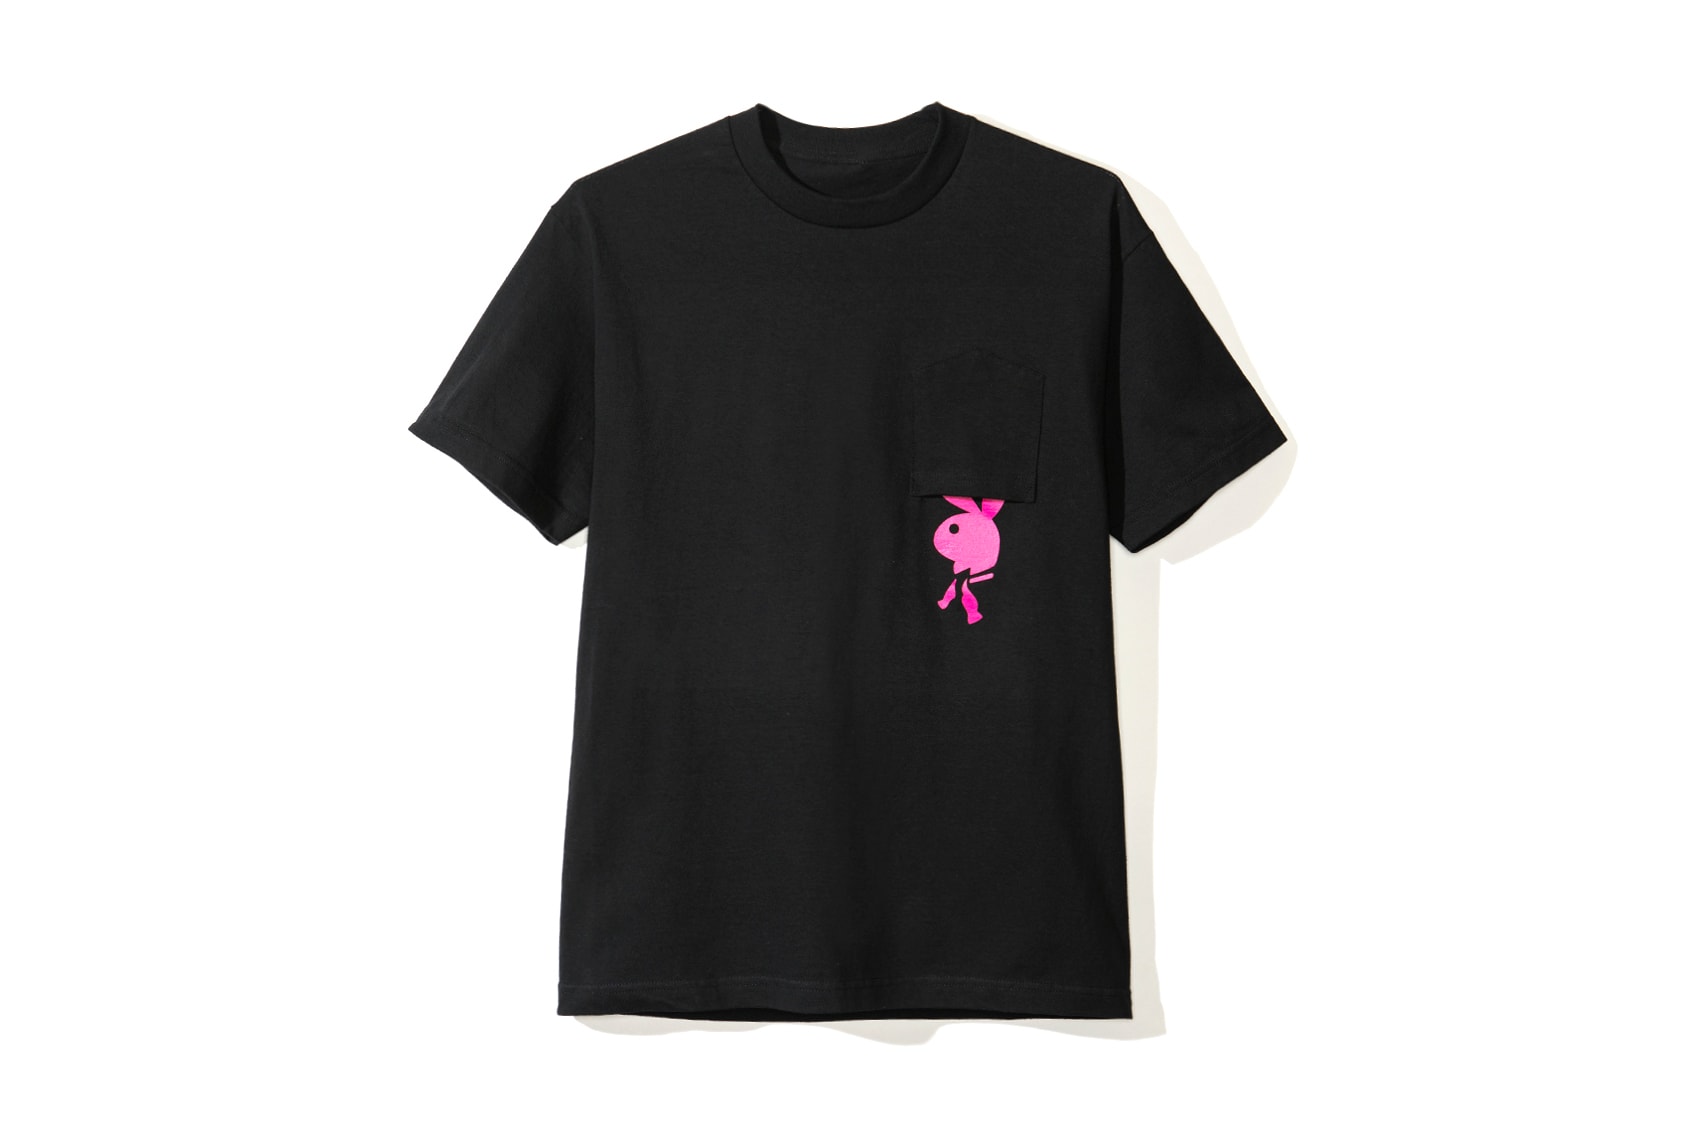 playboy white label anti social social club collaboration collection july 13 2018 black tee shirt pocket bunny rabbit head logo